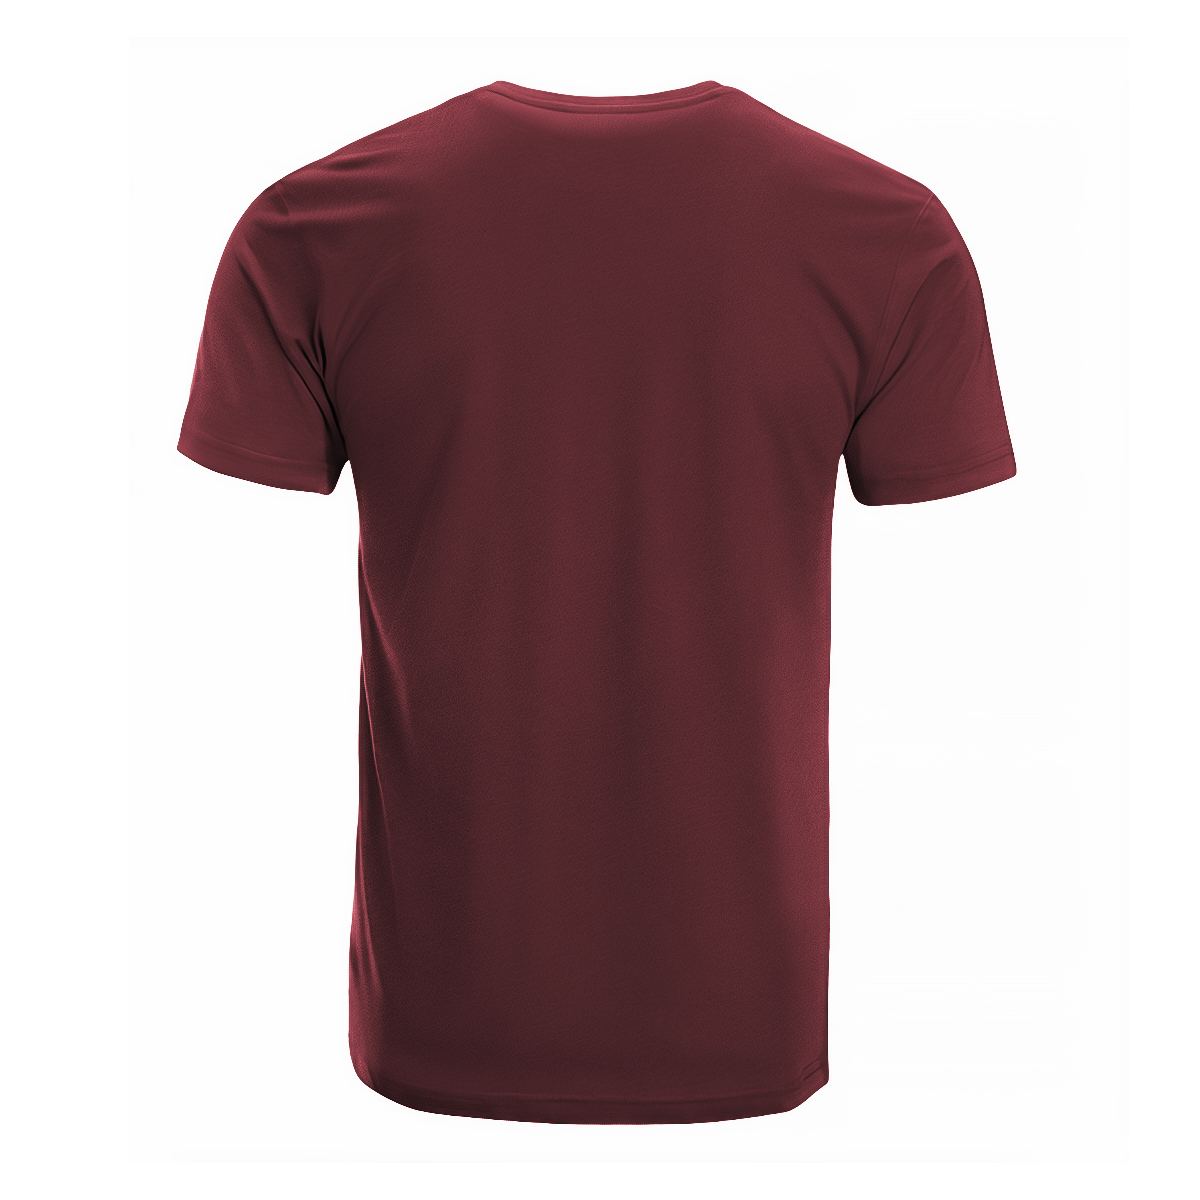 Jackson Tartan Crest T-shirt - I'm not yelling style - Kid